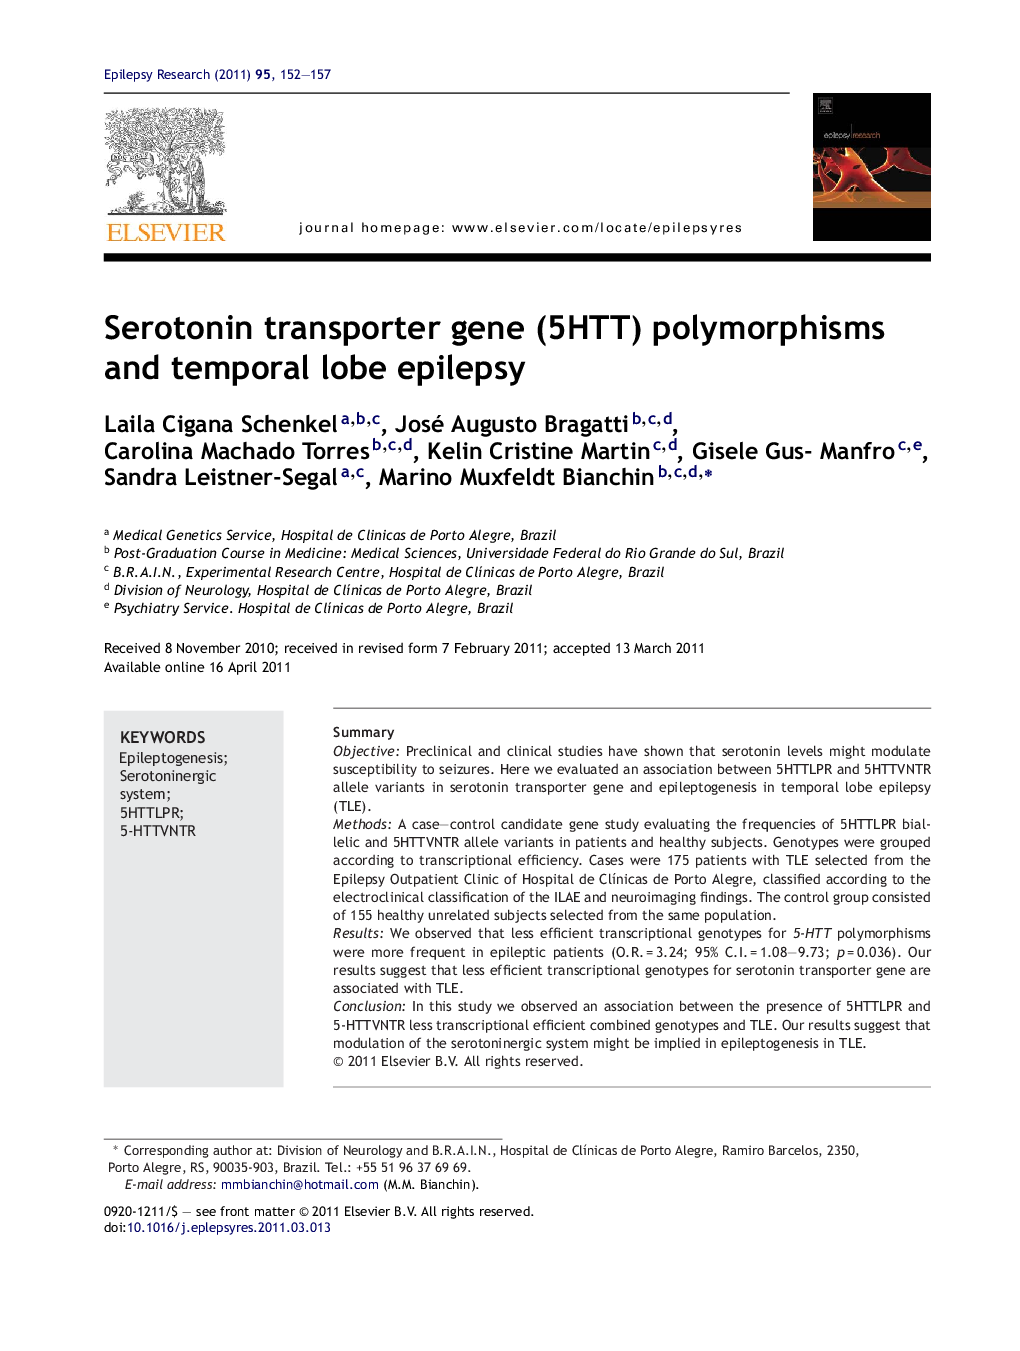 Serotonin transporter gene (5HTT) polymorphisms and temporal lobe epilepsy